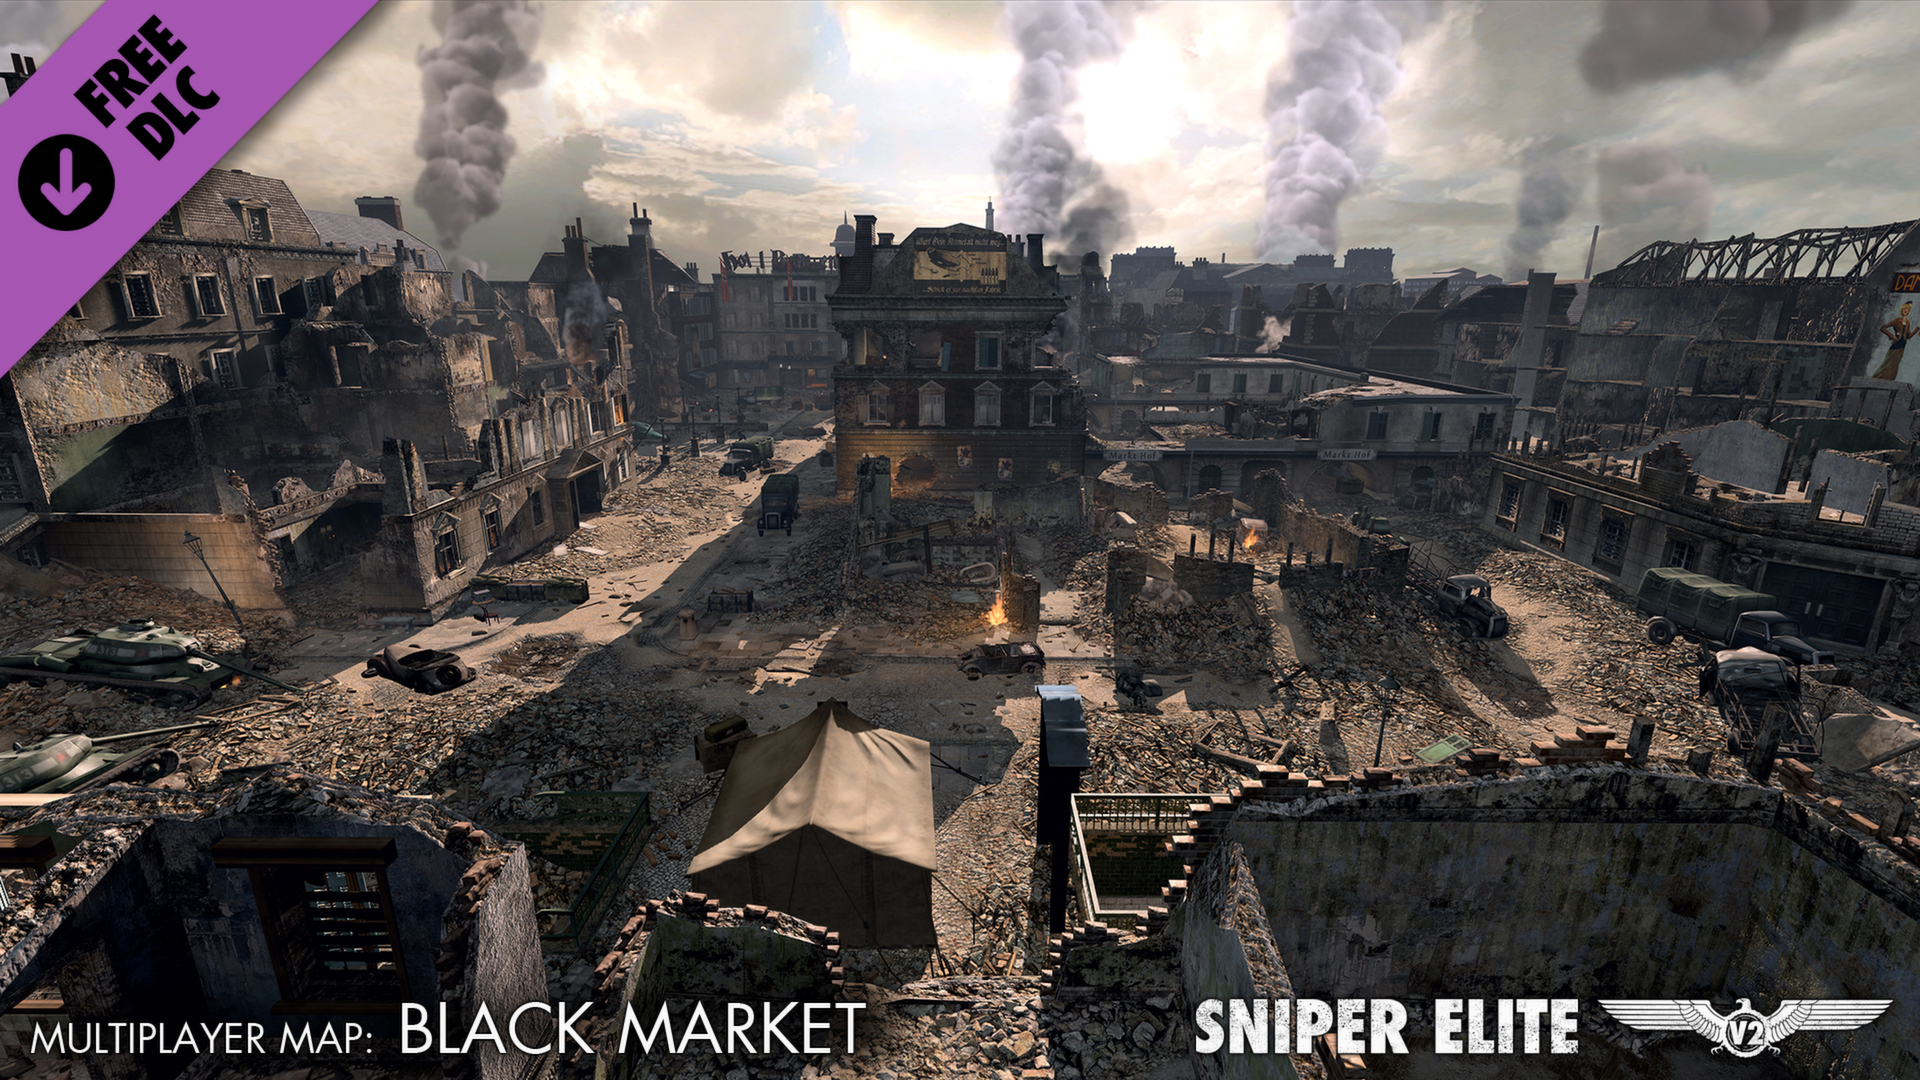 sniper elite v2 multiplayer lan crack